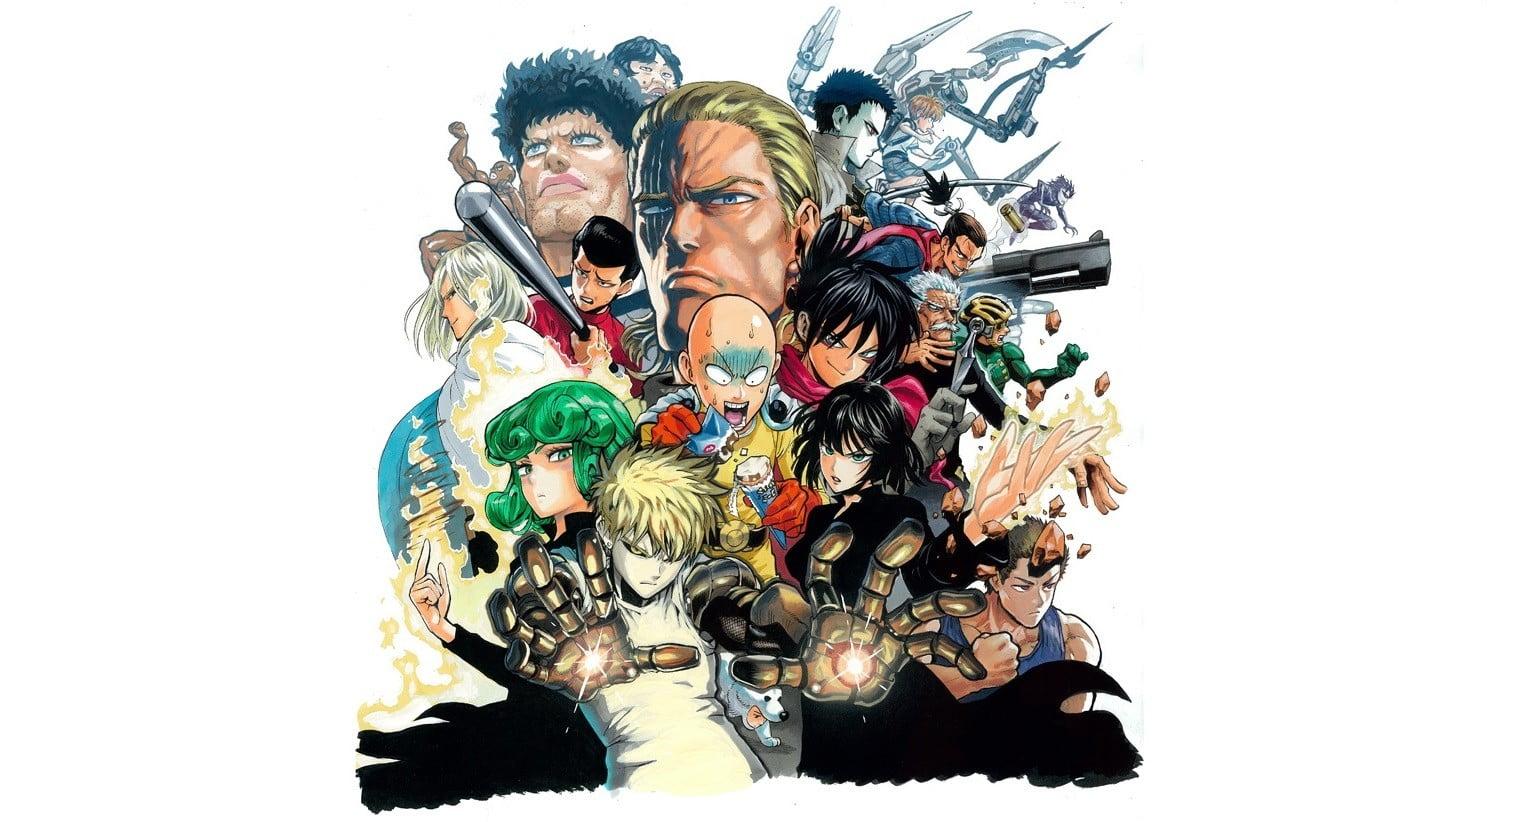 Characters Illustration, One Punch Man, Genos, Saitama